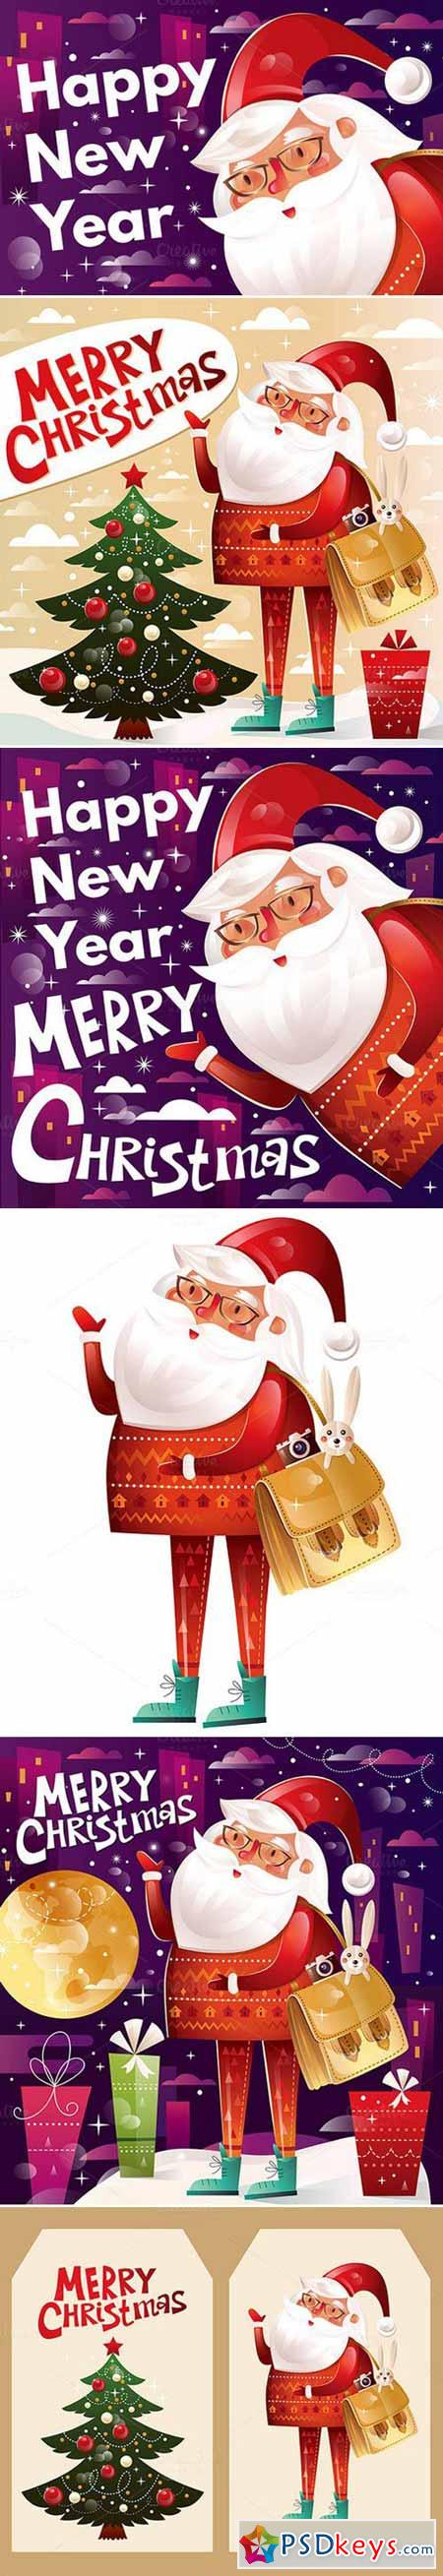 Christmas illustrations with Santa 450682